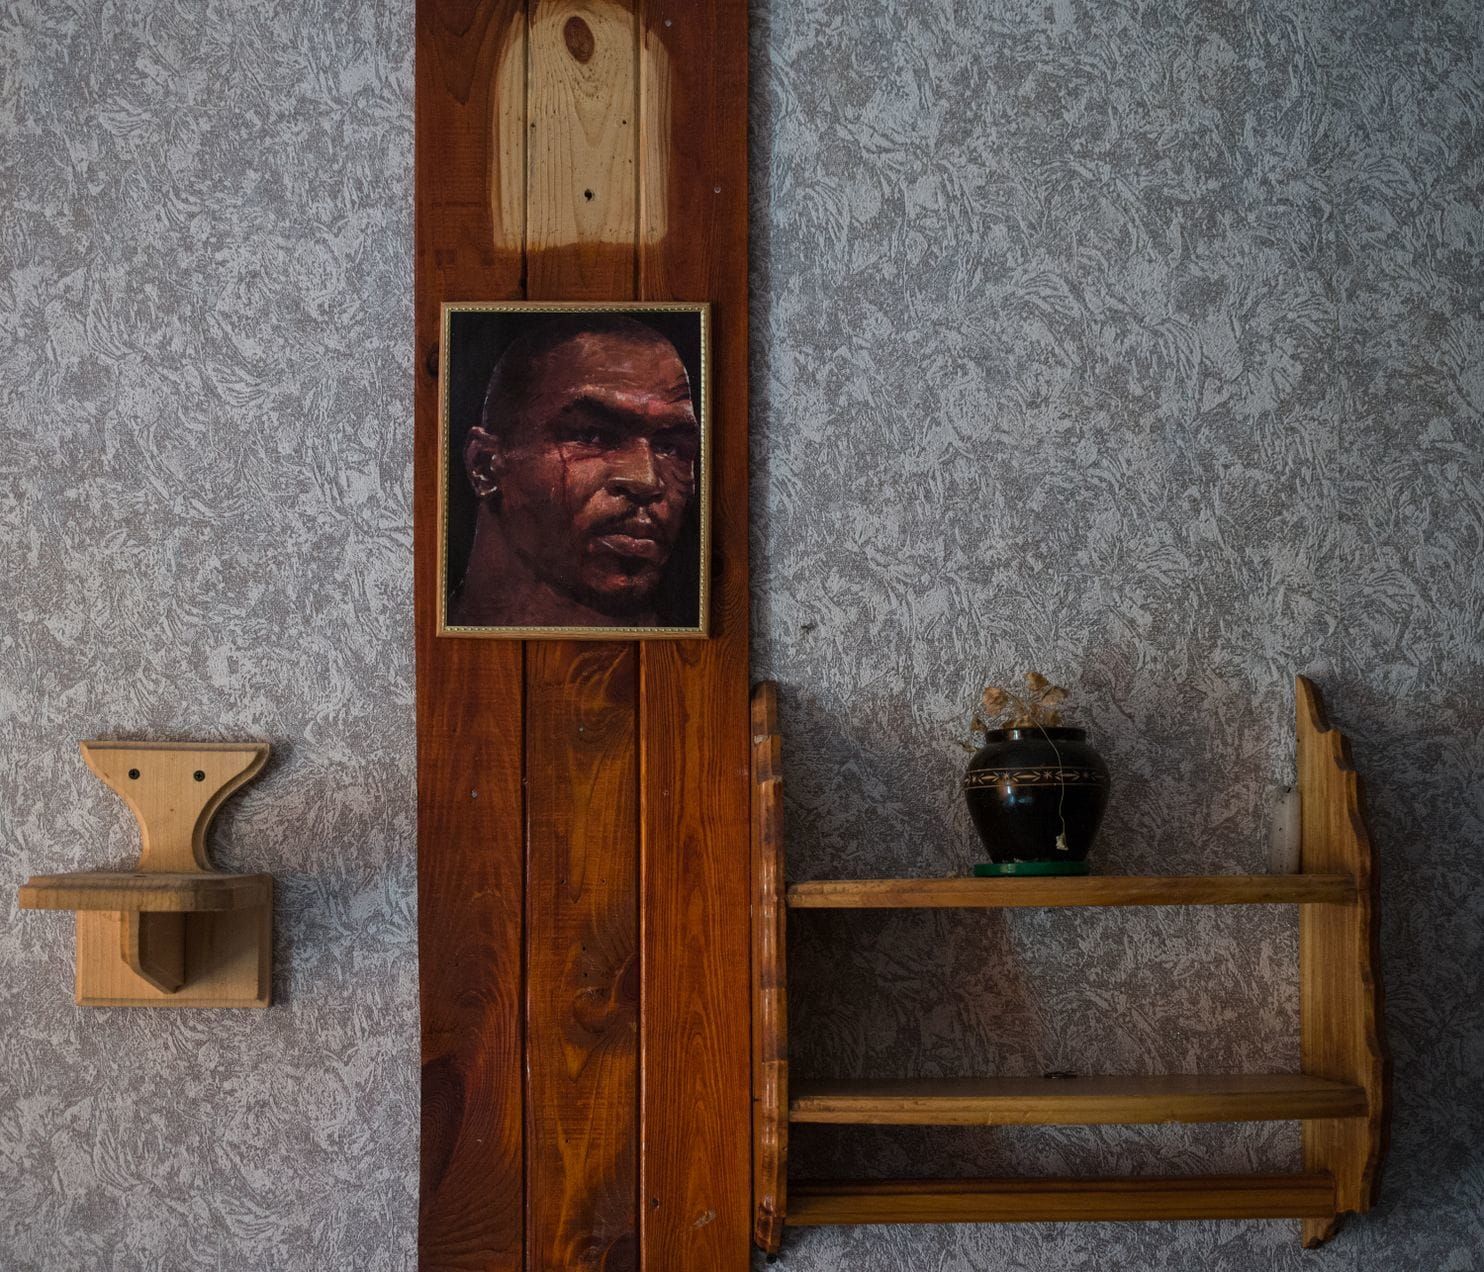 A portrait of Mike Tyson at a prison in Chernigov, Oblast region. Image by Misha Friedman. Ukraine, 2019.